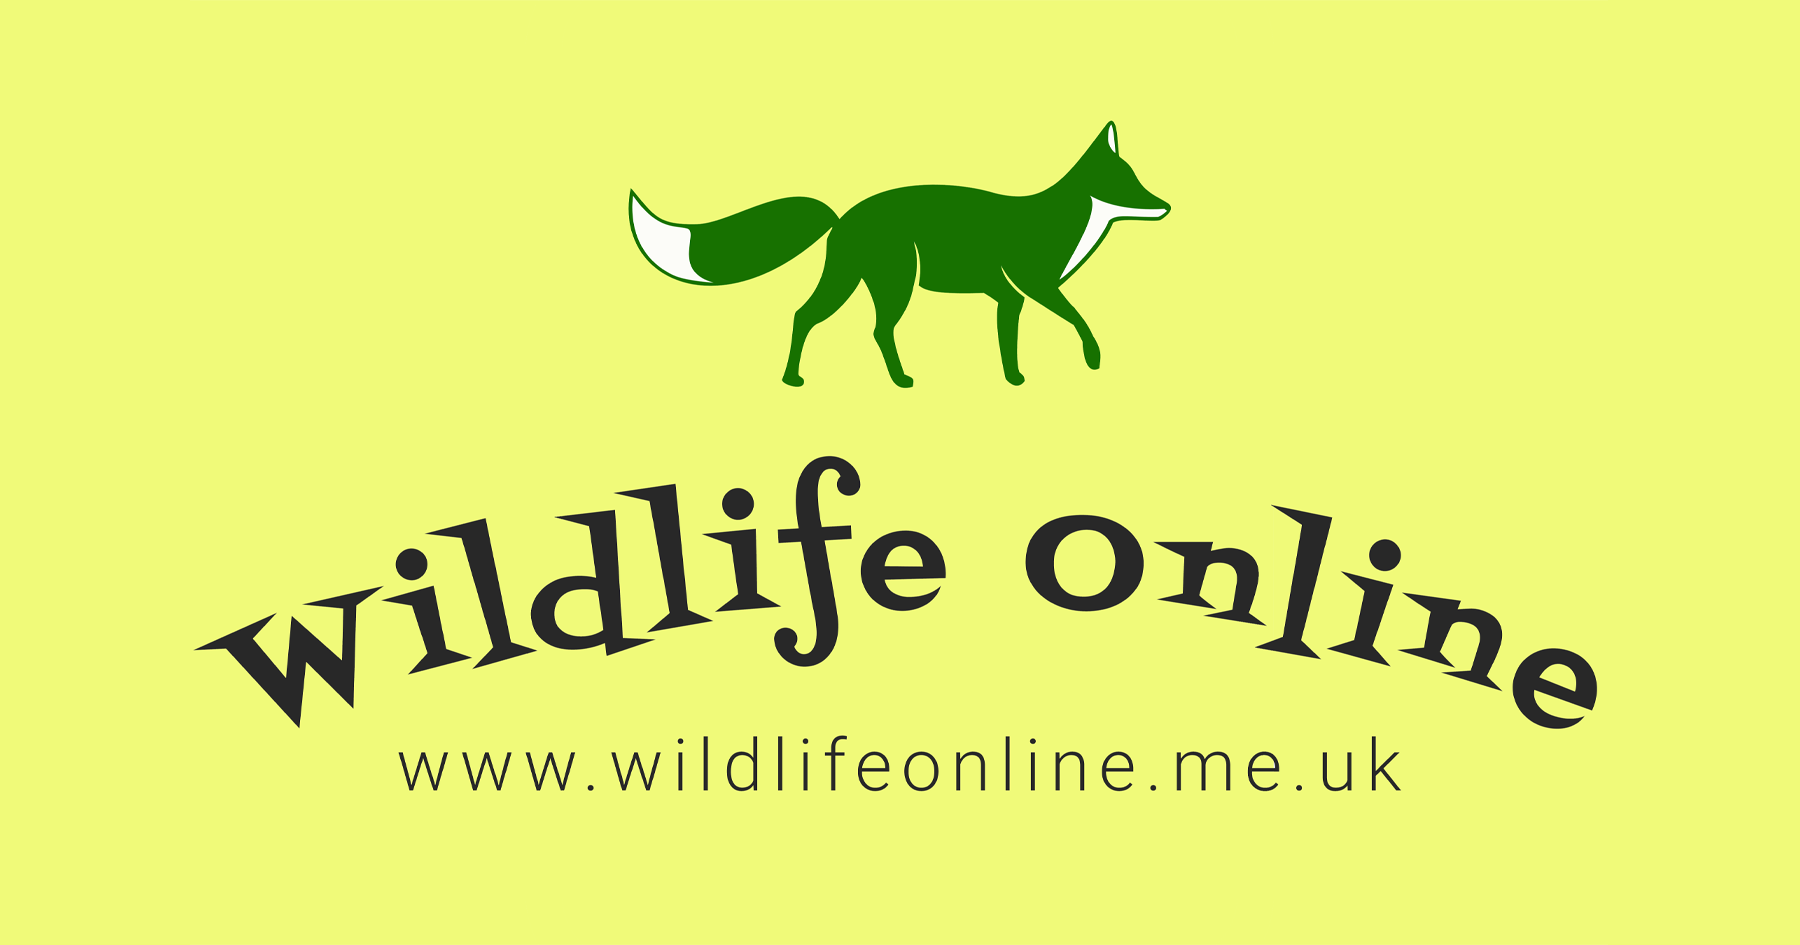 Do foxes kill for fun? | Wildlife Online